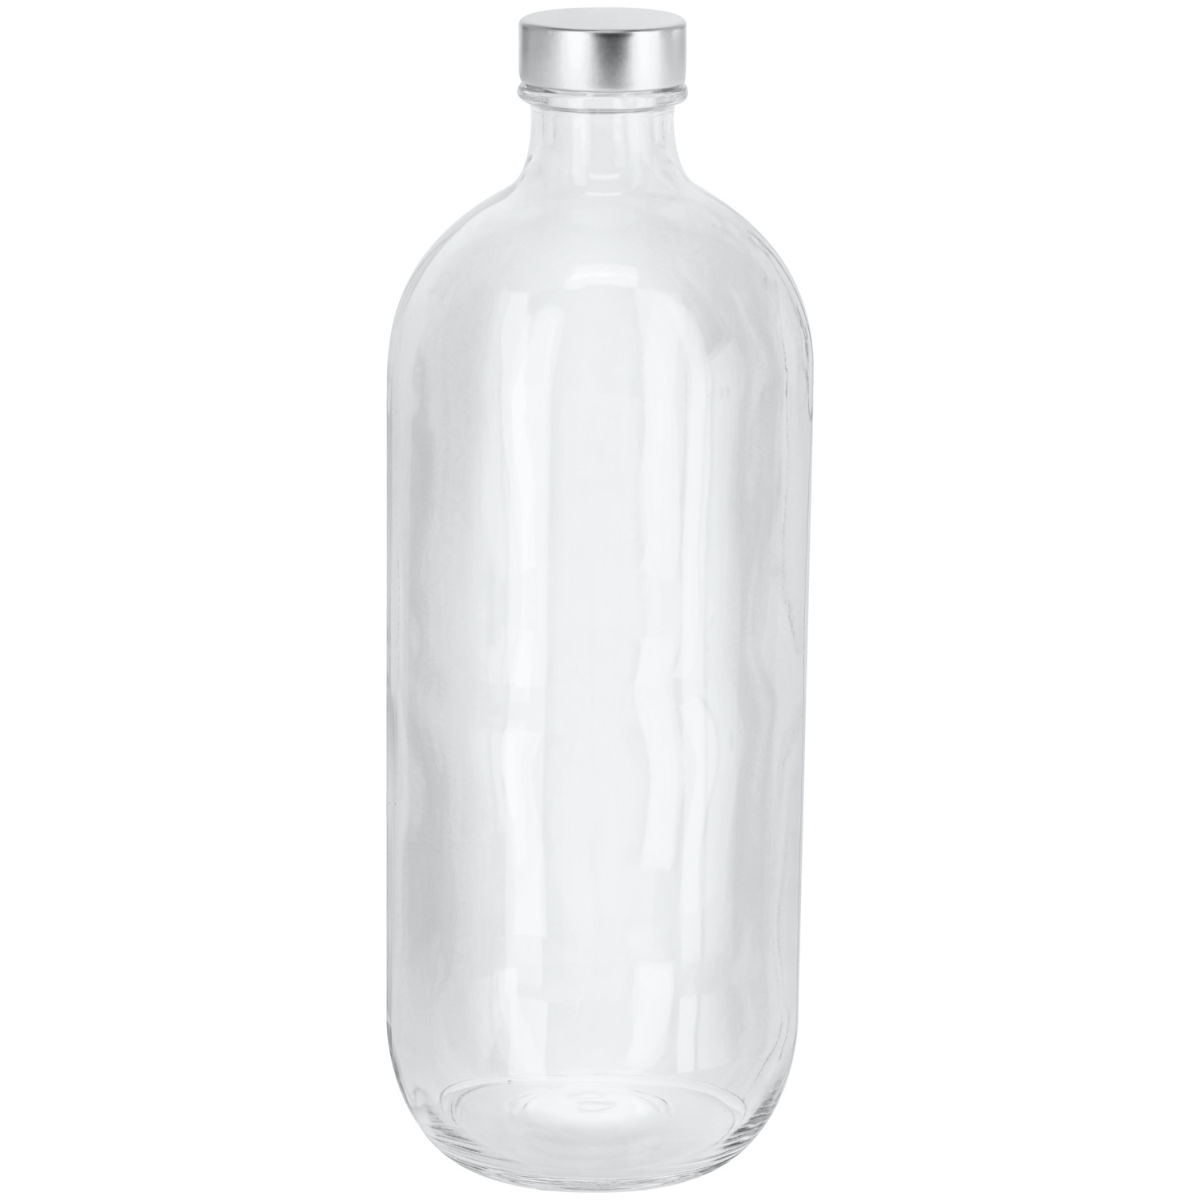 Pasabahçe Flaska Iconic; 1.1l, 9.2x25 cm (ØxH); Transparent/Silverfärg; 6 Styck / Förpackning